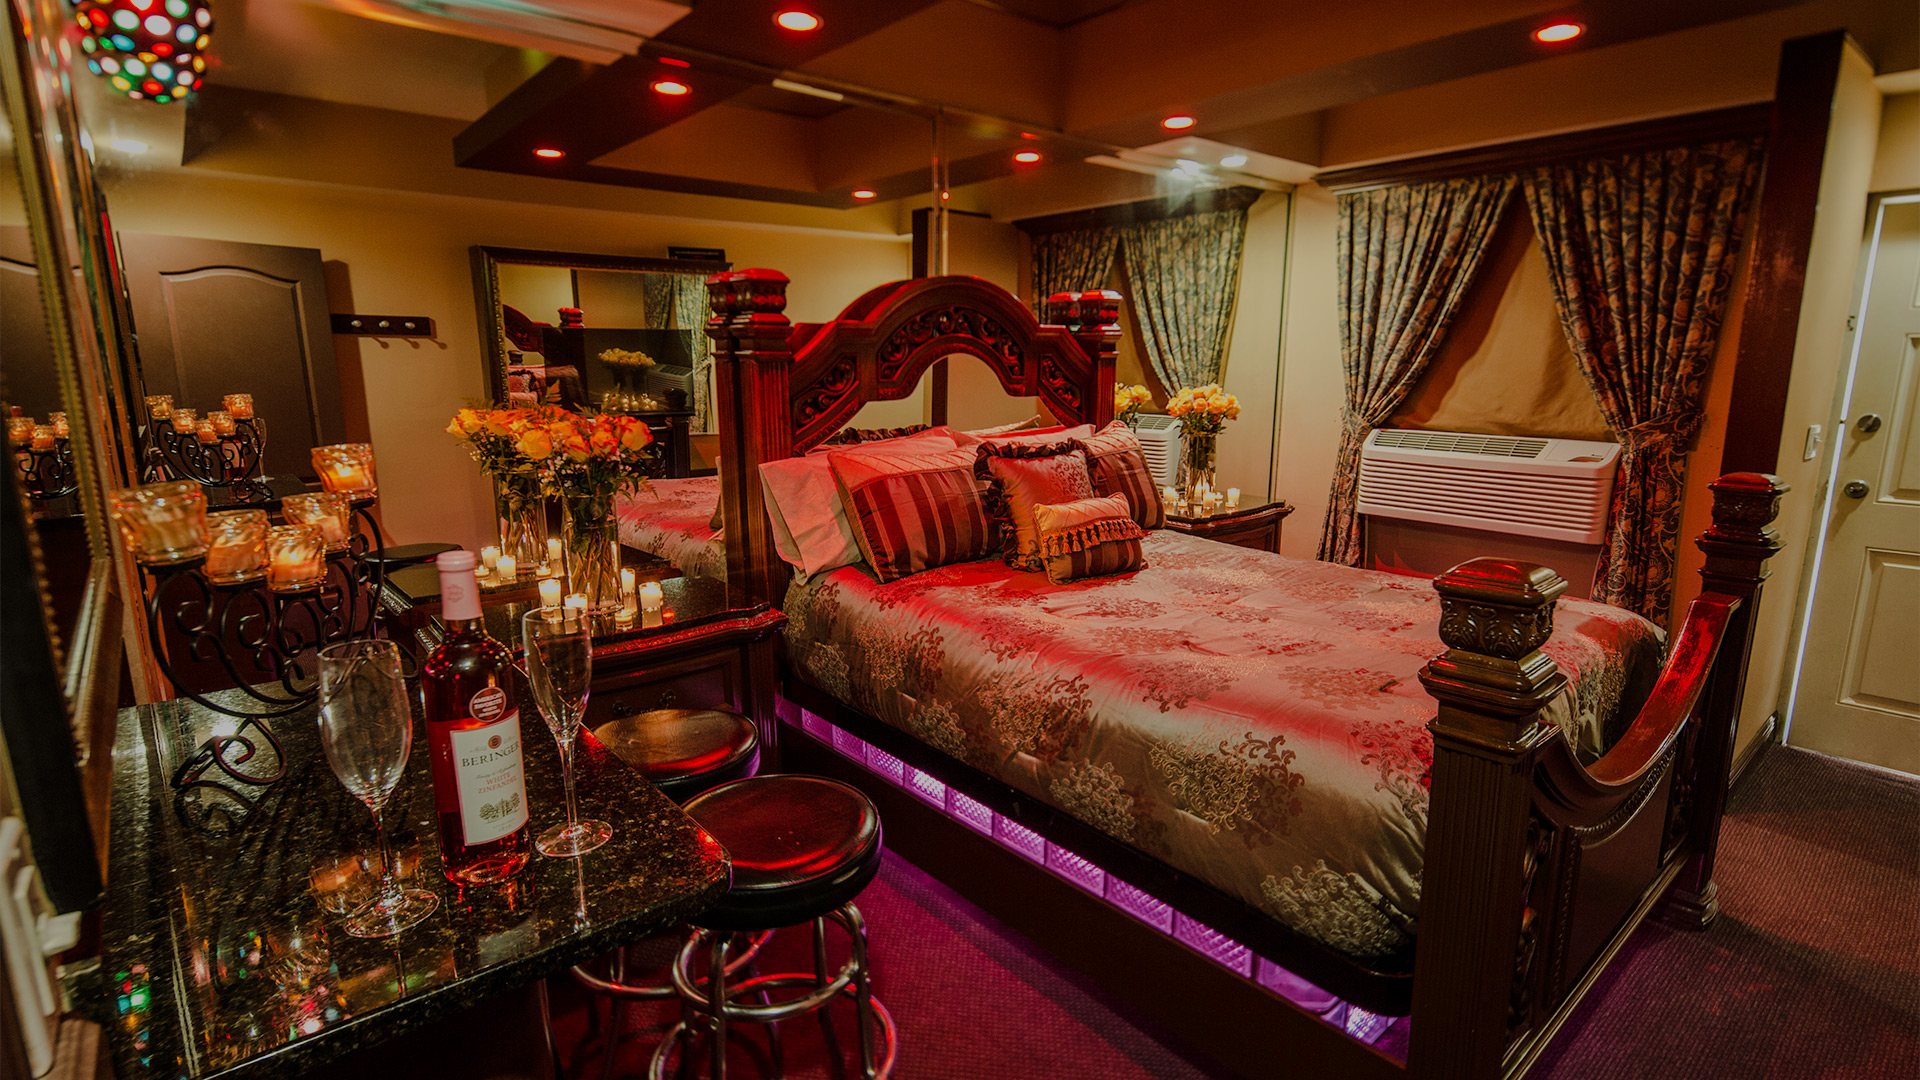 Executive Fantasy Hotels Executive Motel Miami Theme Hotels In Miami Romant...